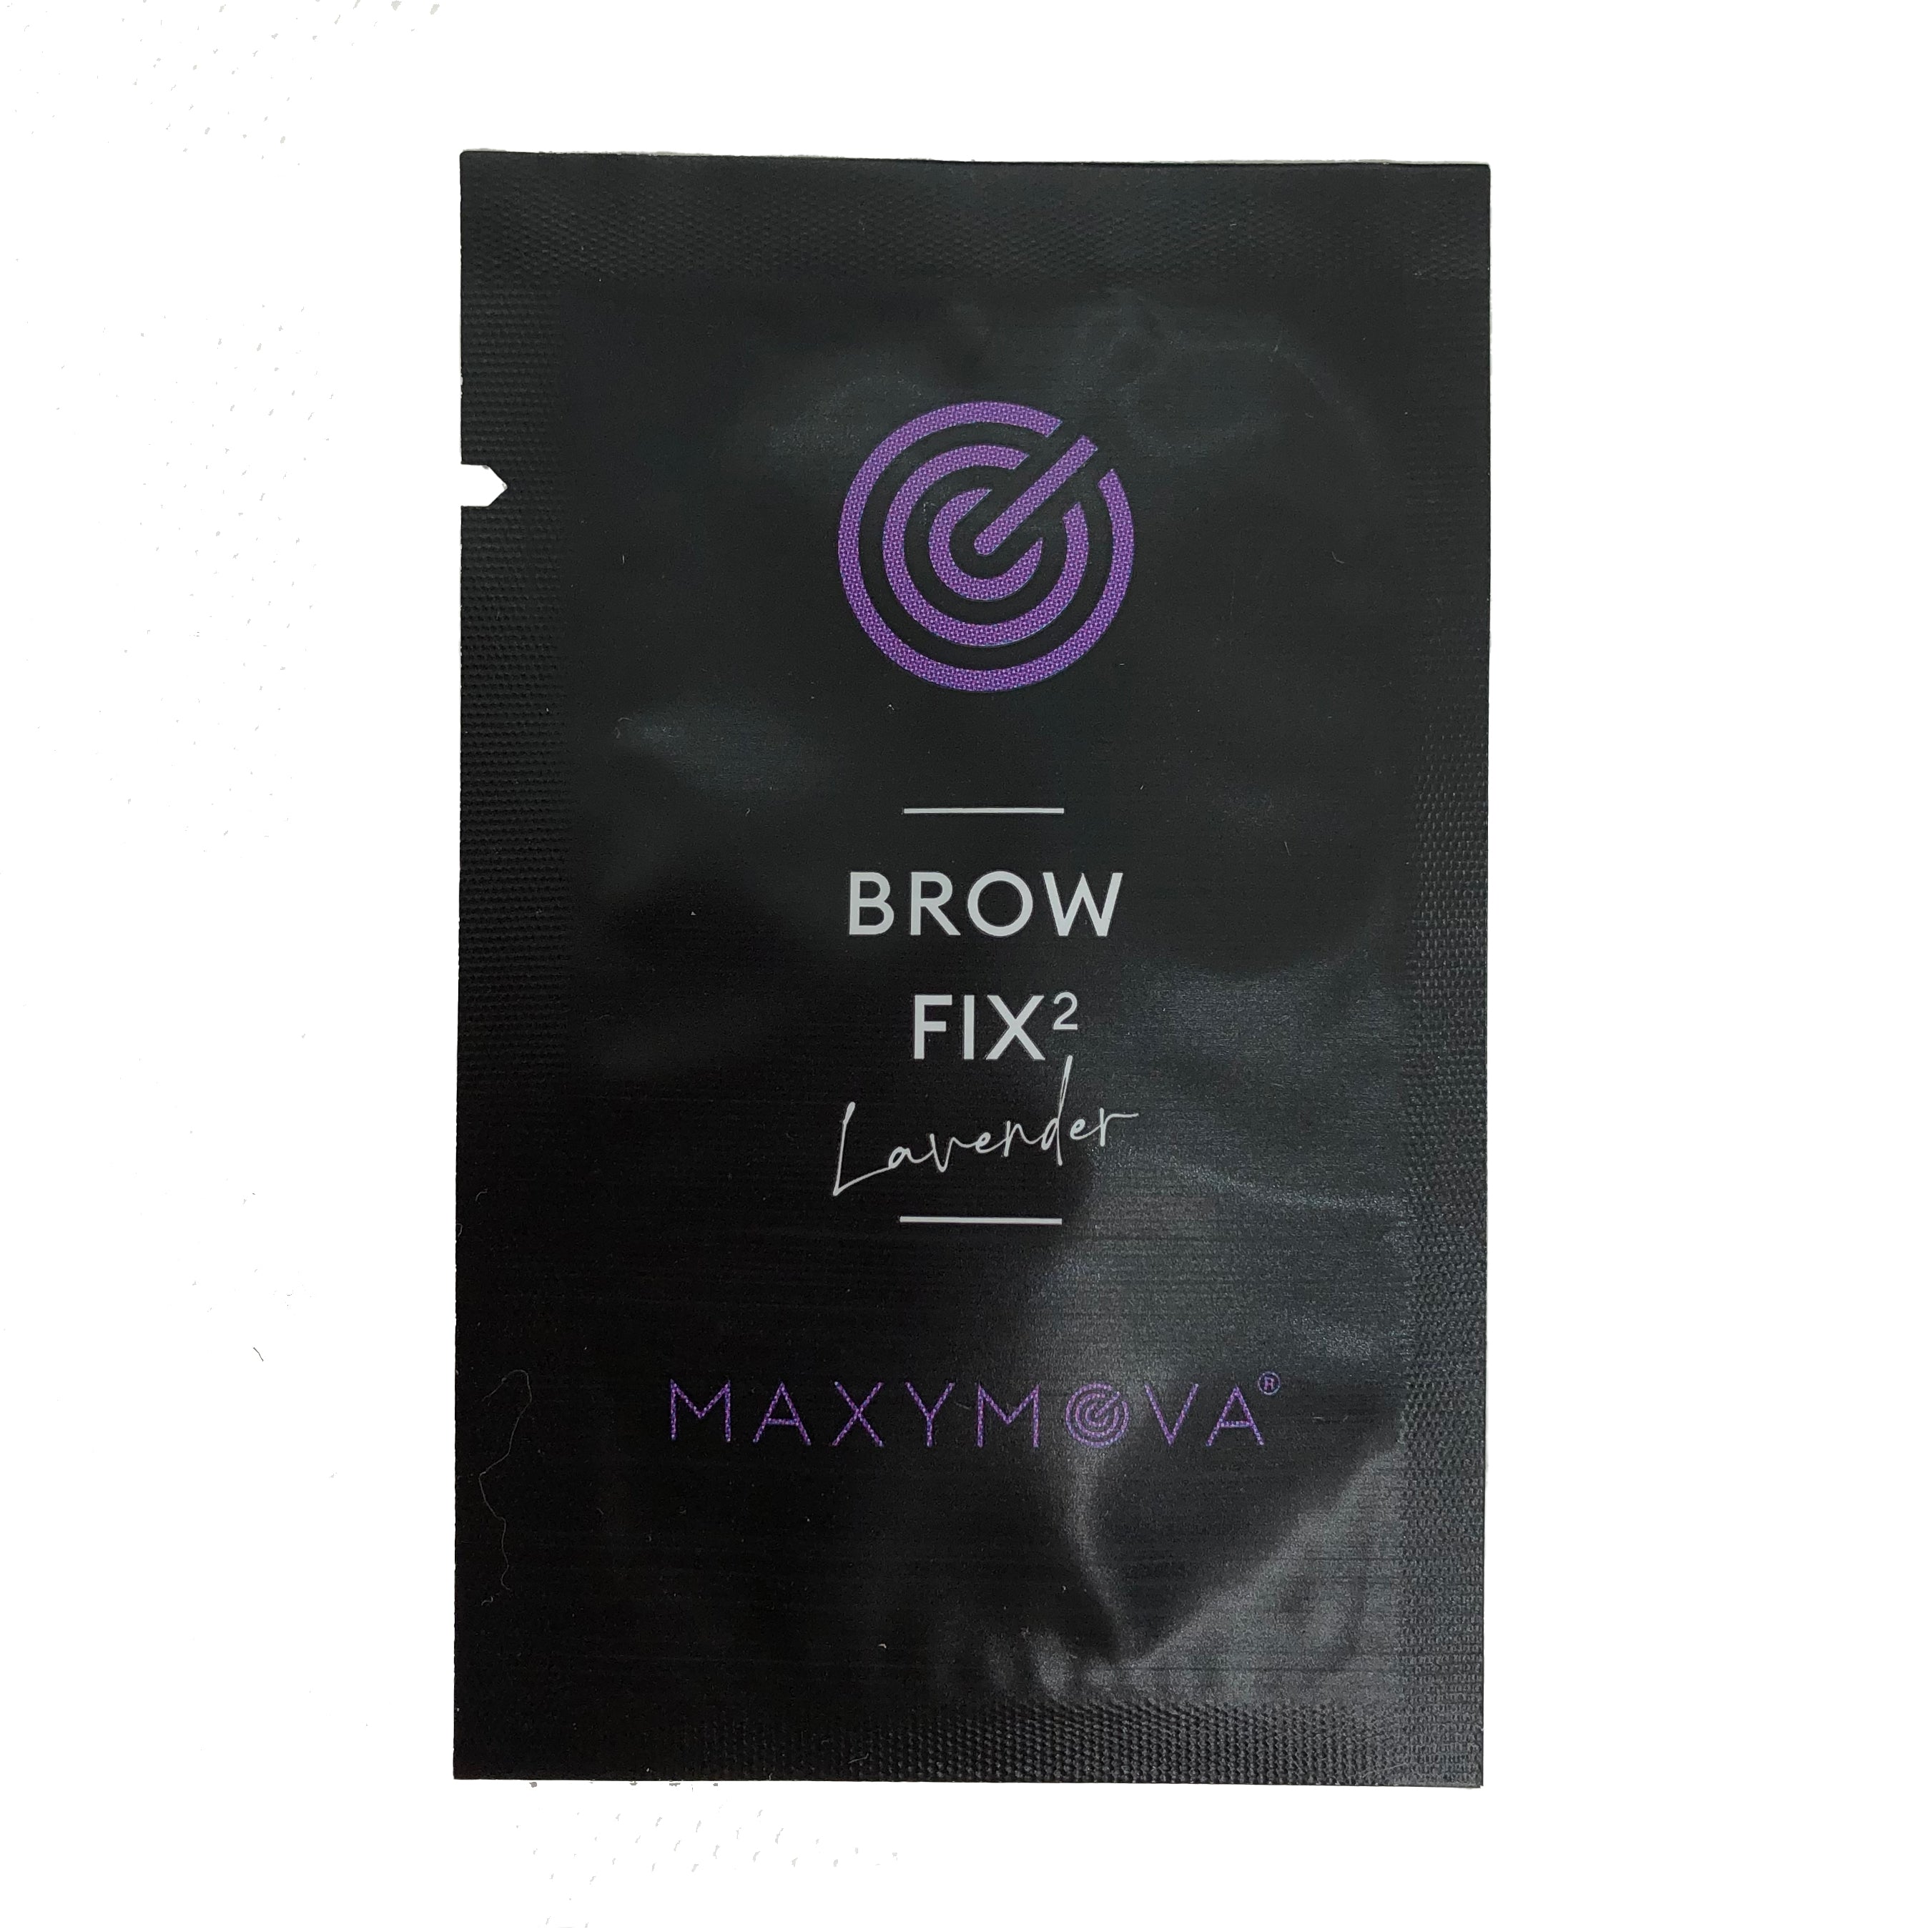 Maxymova Brow fix 2 Lavender - 1 single-dose sachet 1.5 ml